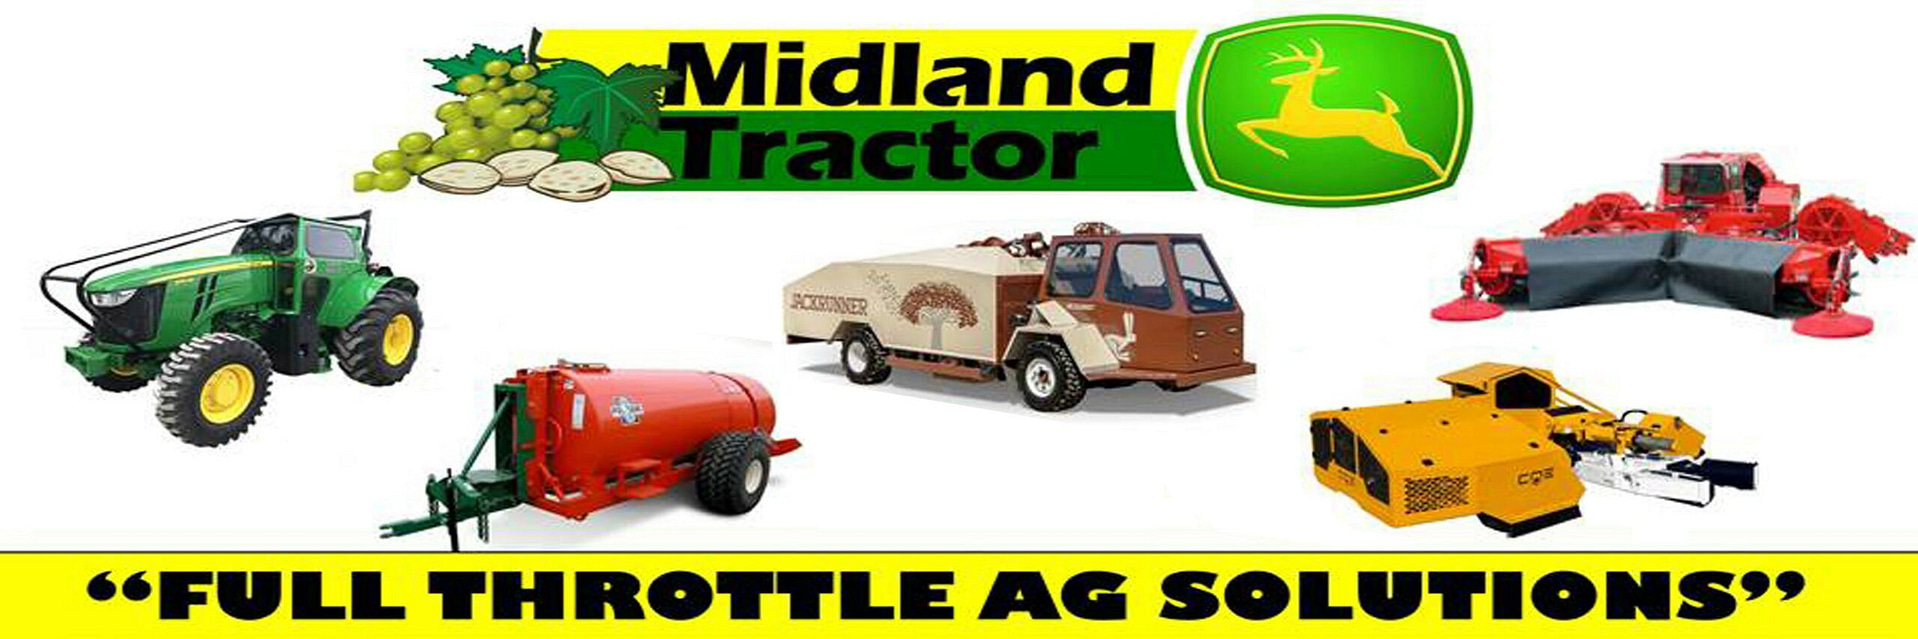 midland tractor